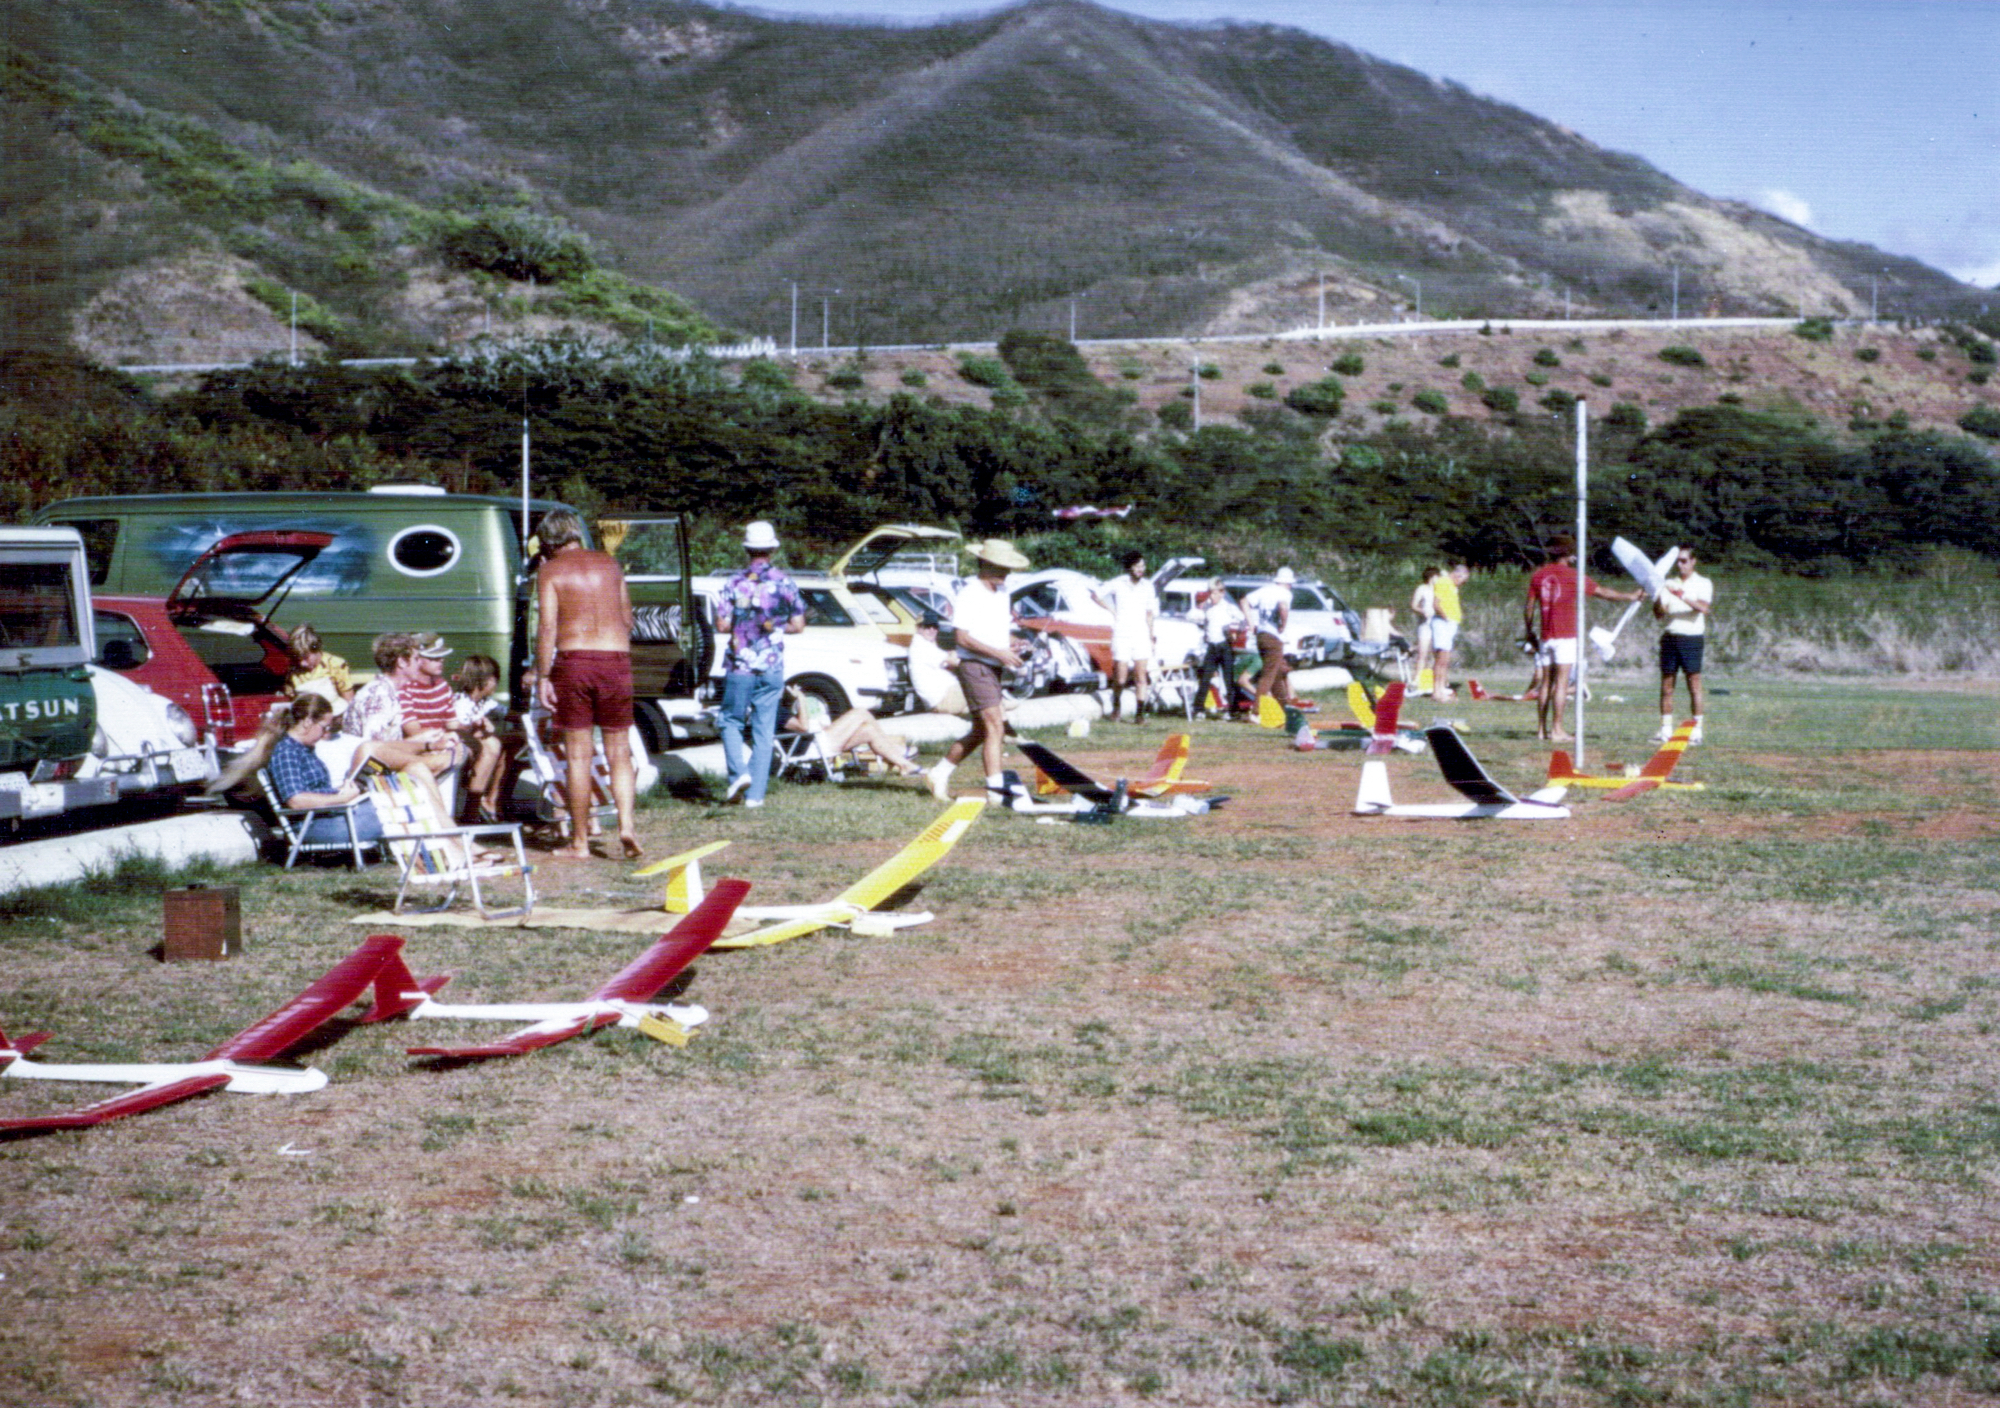 1970s - Mark Chung launching his original design sailplane